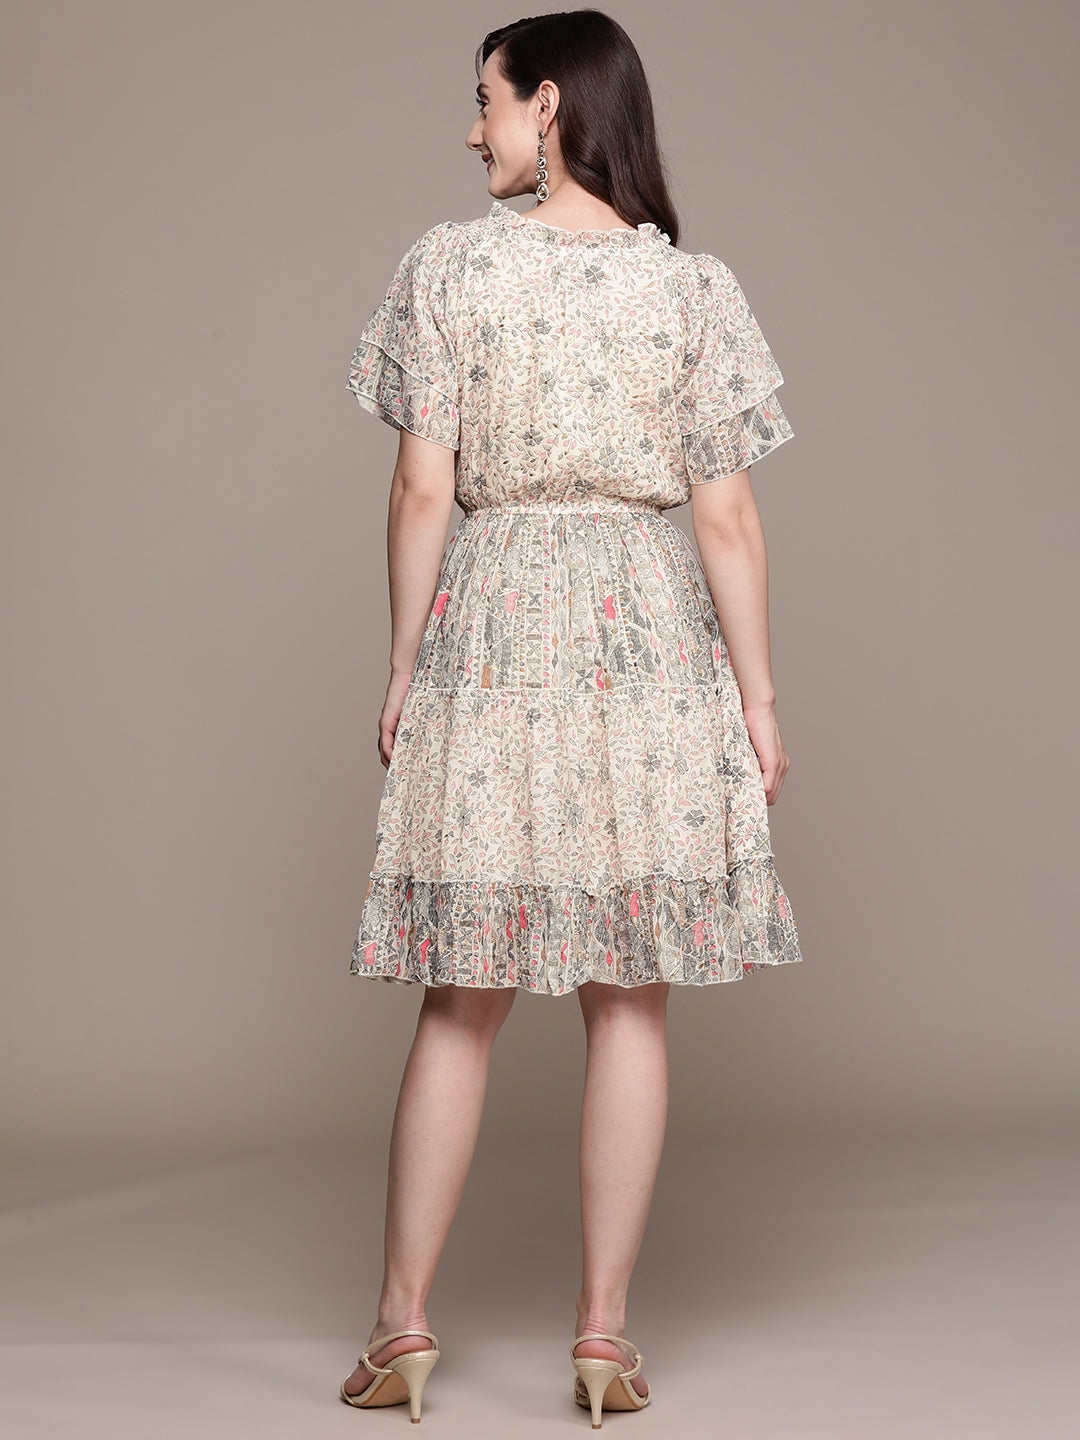 Ishin Women's Cream Floral Empire Dress